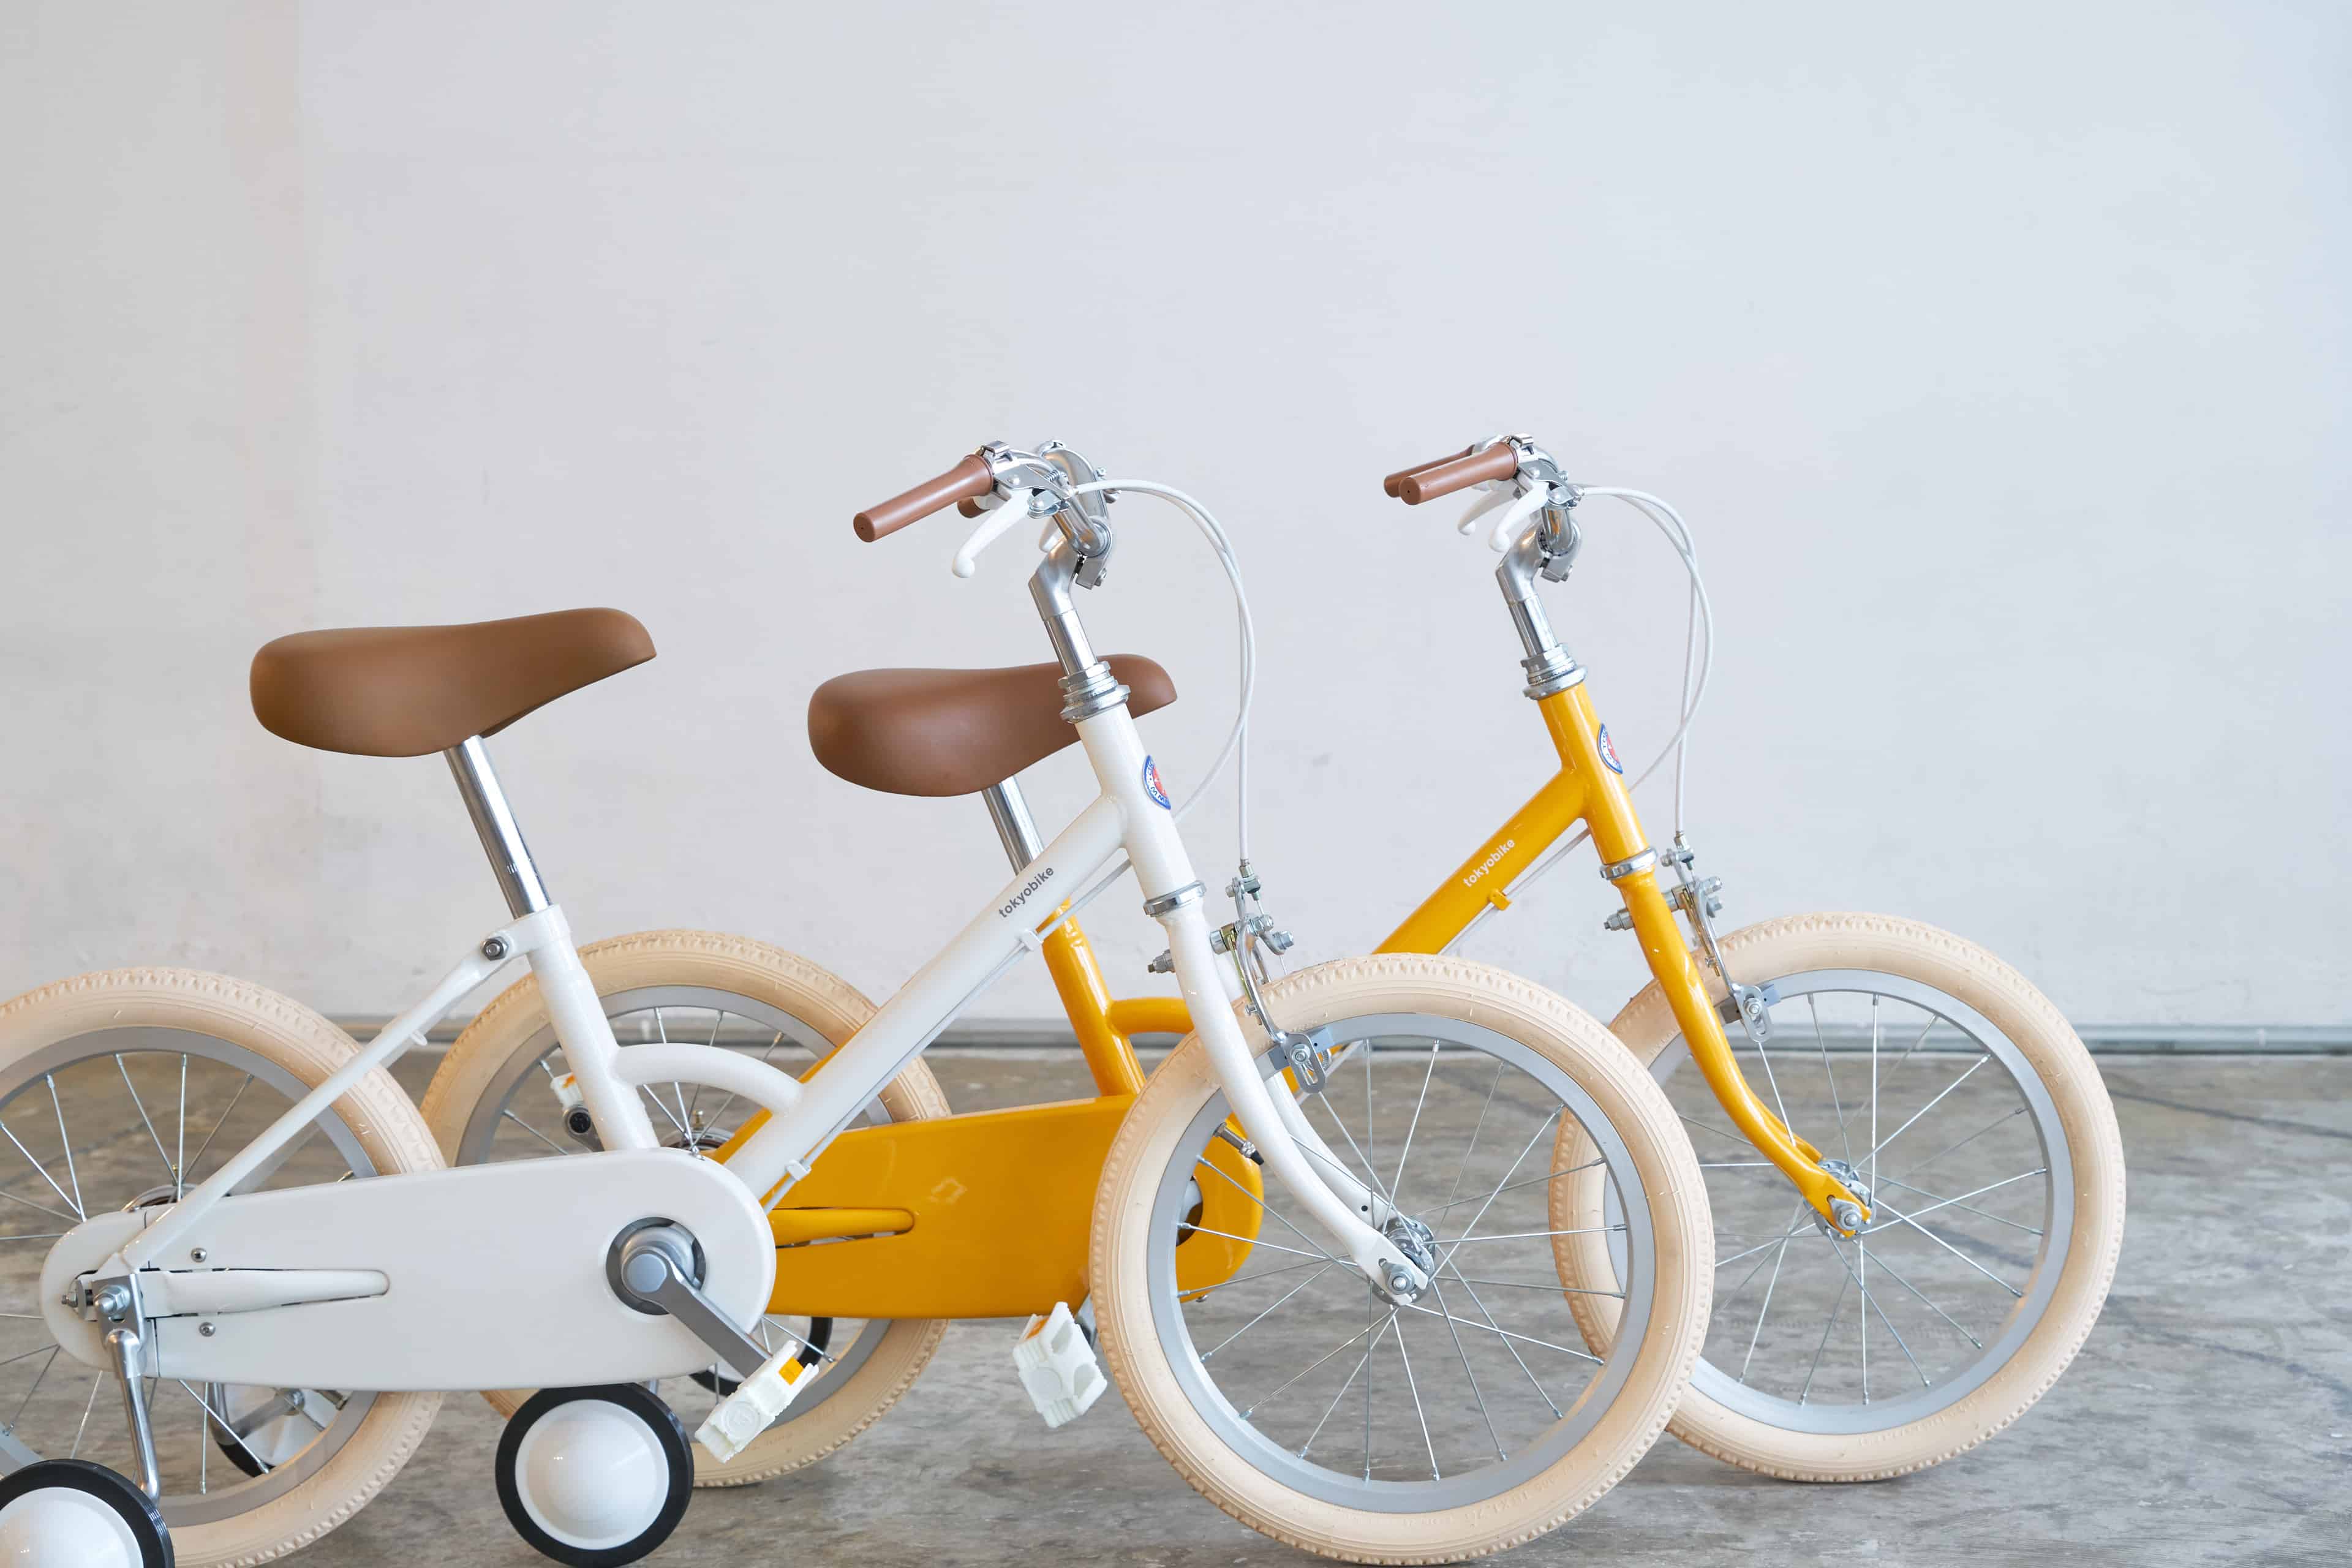 little tokyobike : シンプルで変わらない、ふつうで特別な16インチ自転車